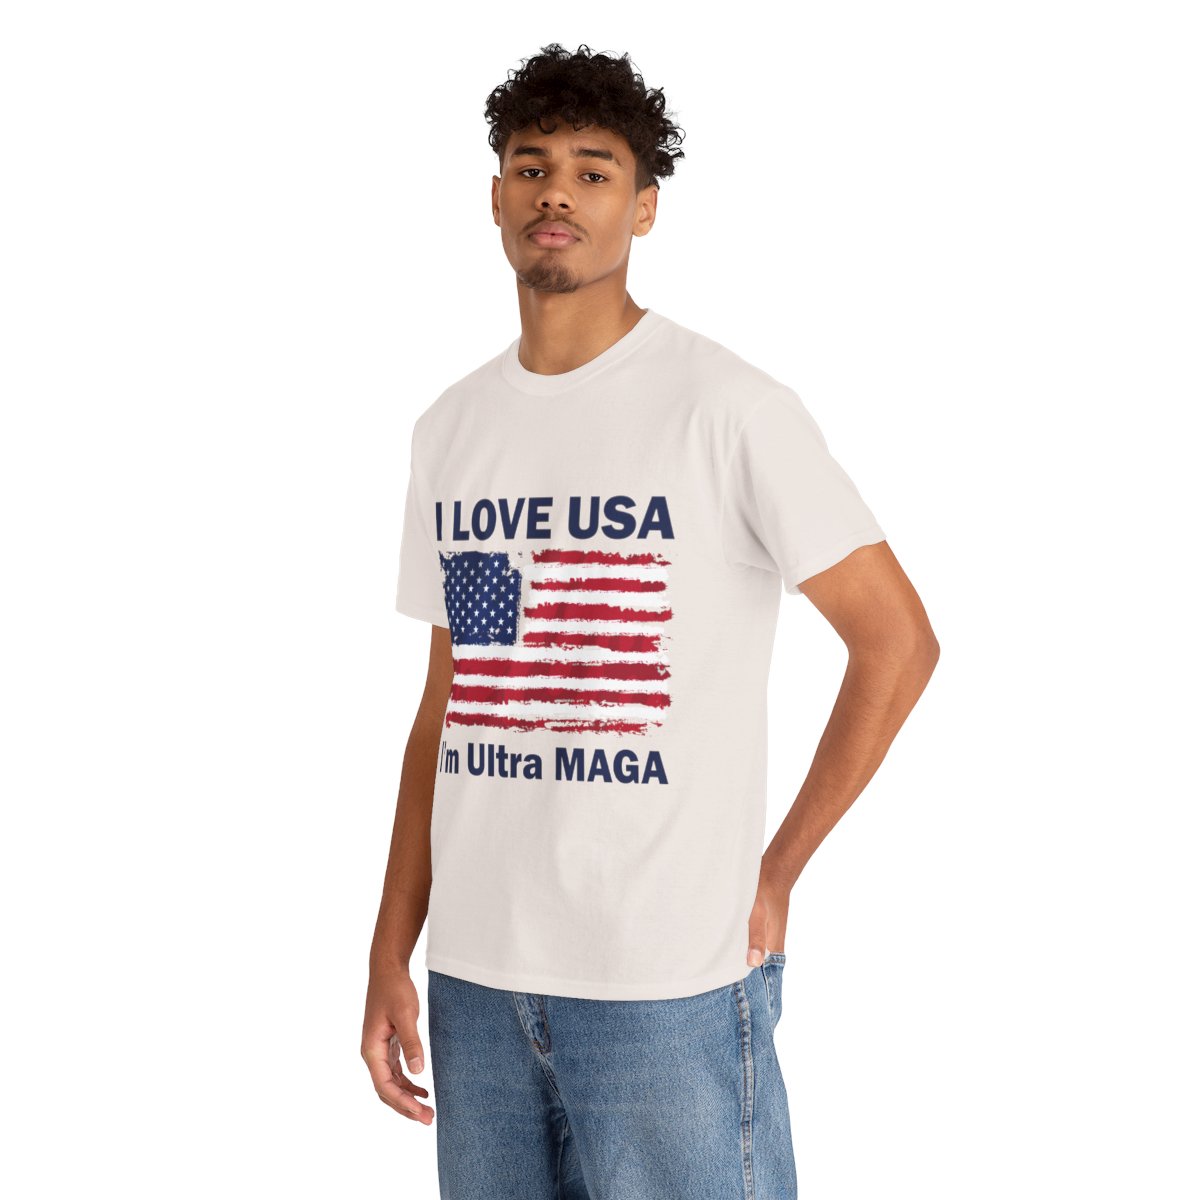 I Love USA I'm Ultra MAGA product thumbnail image